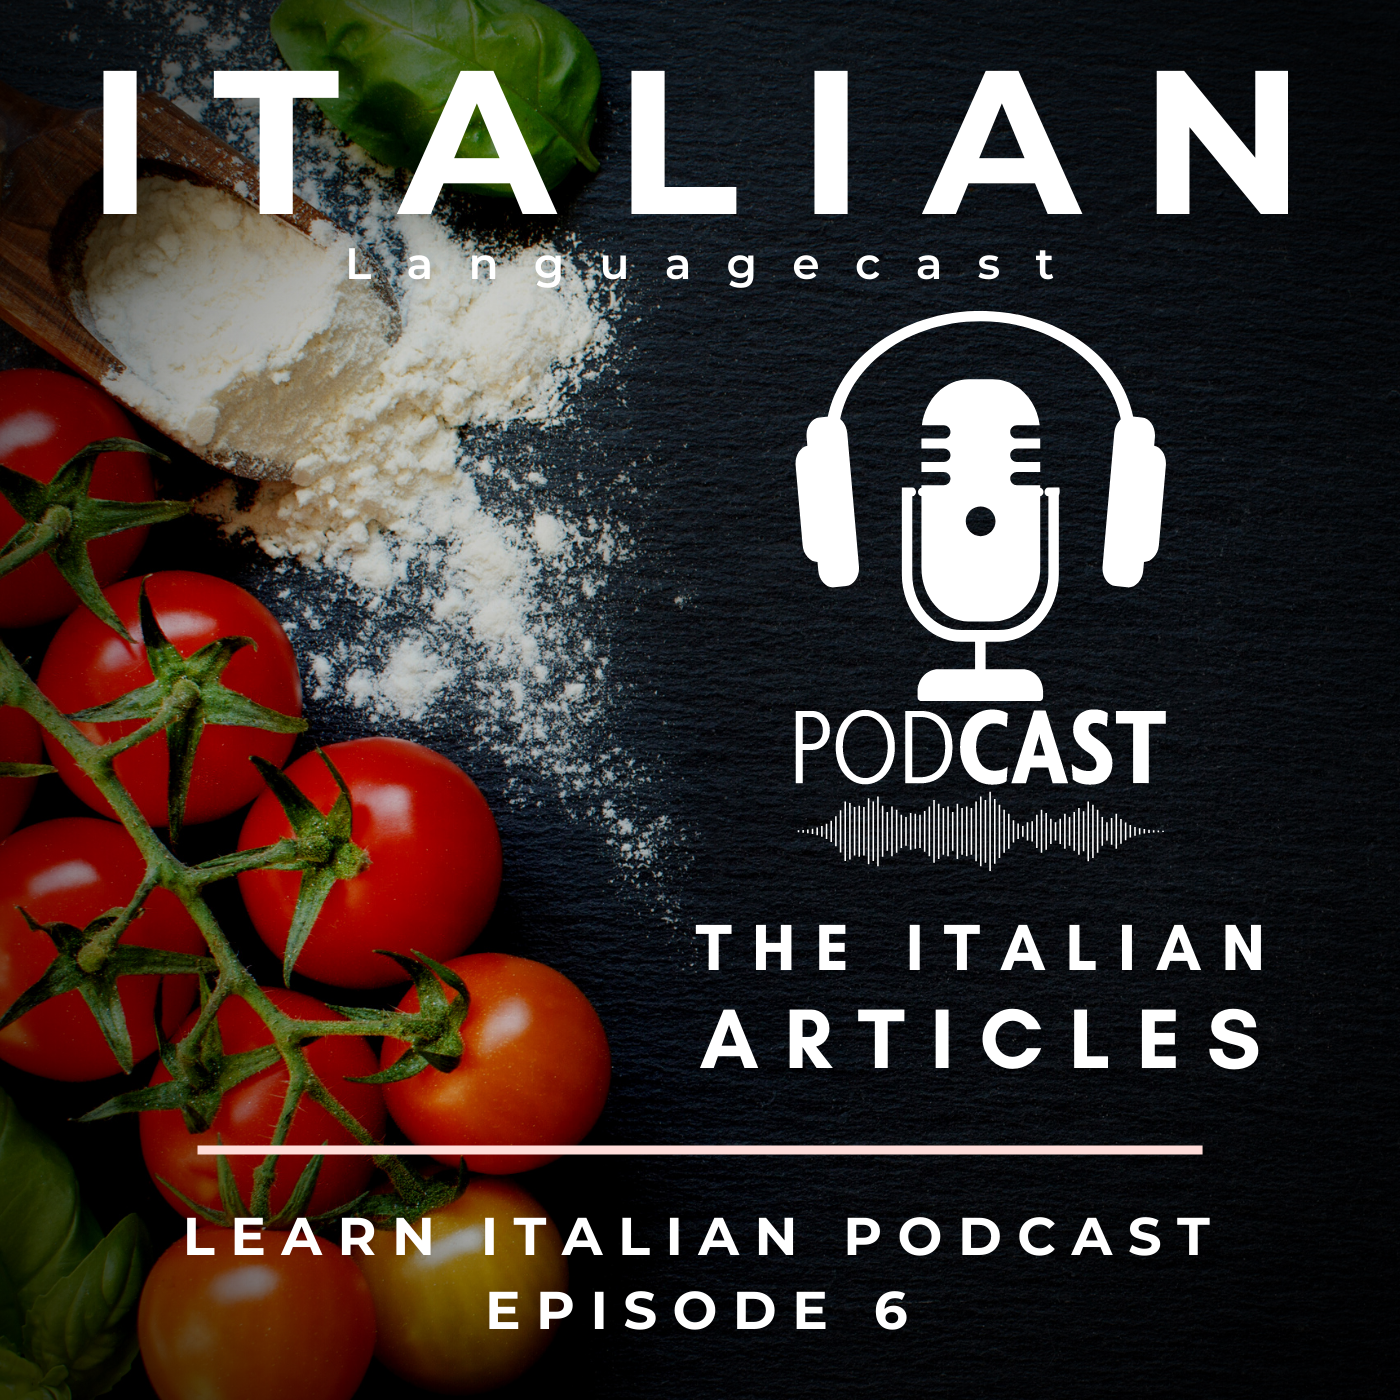 Learn Italian Podcast: The Italian Articles (Episode 6)